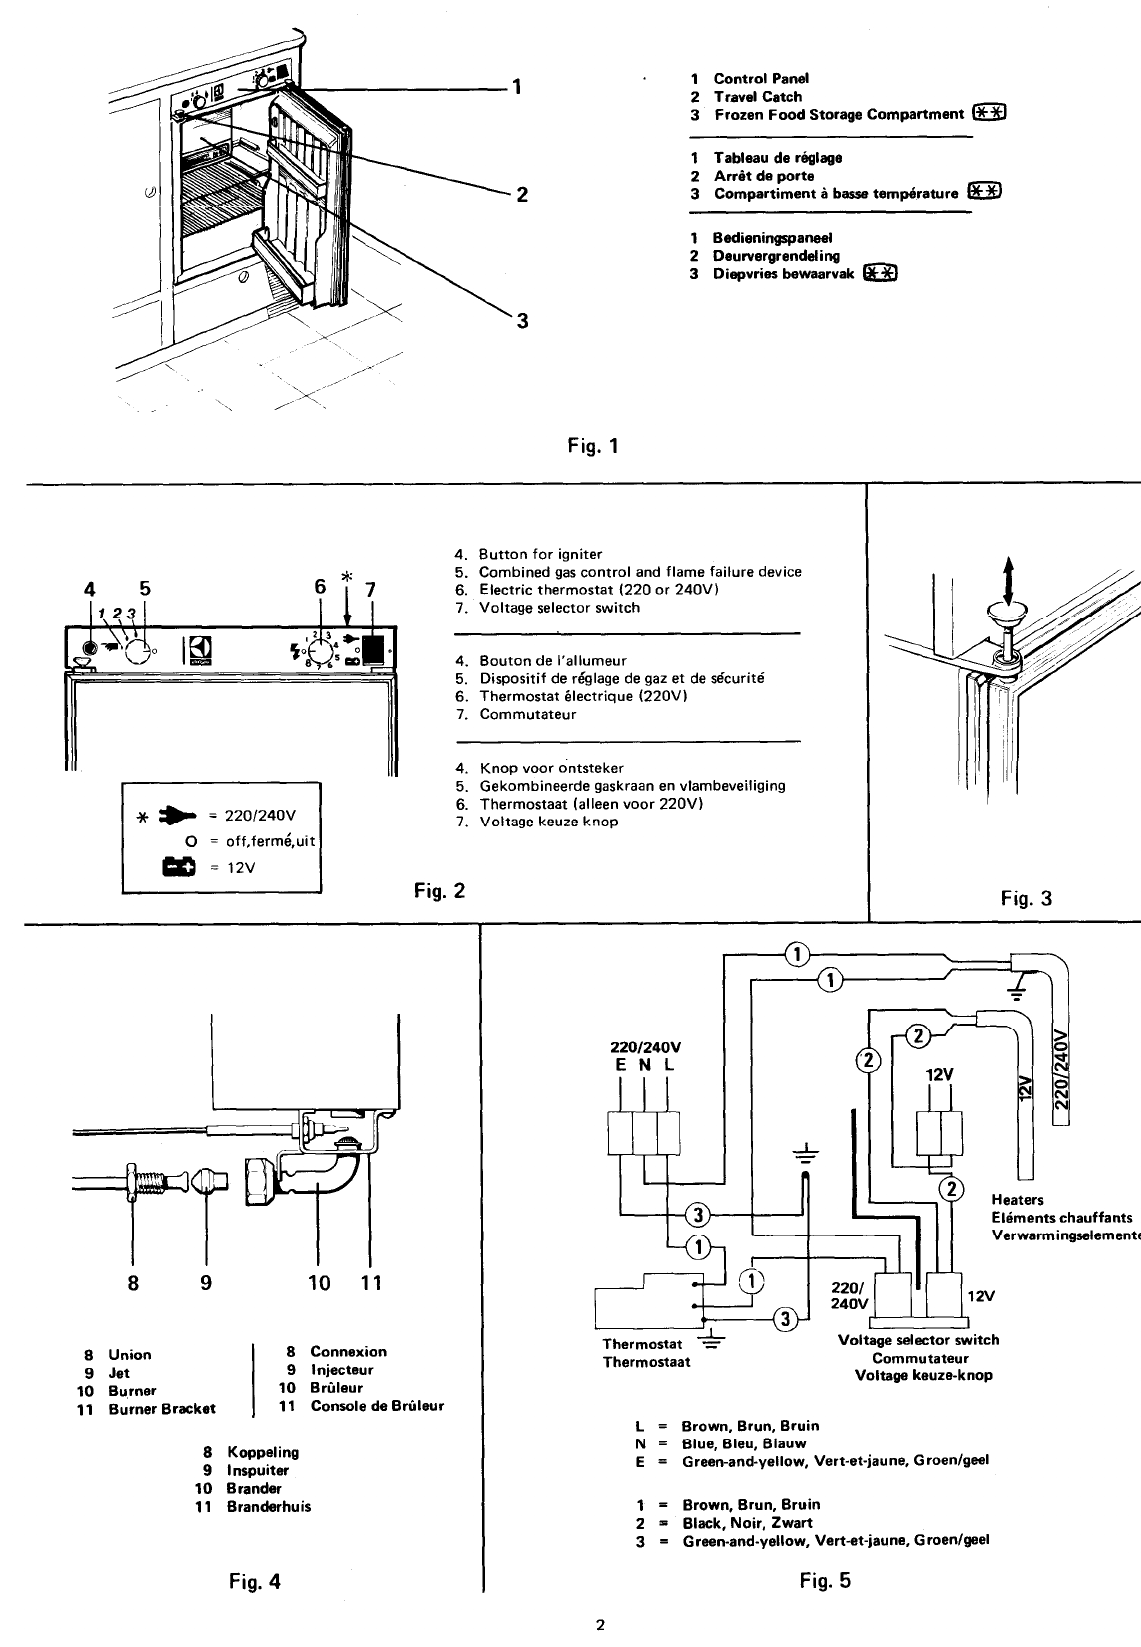 Manual Electrolux RM212 (page 1 of 5) (English)  Electrolux 3 Way Caravan Fridge Wiring Diagram    Libble.eu